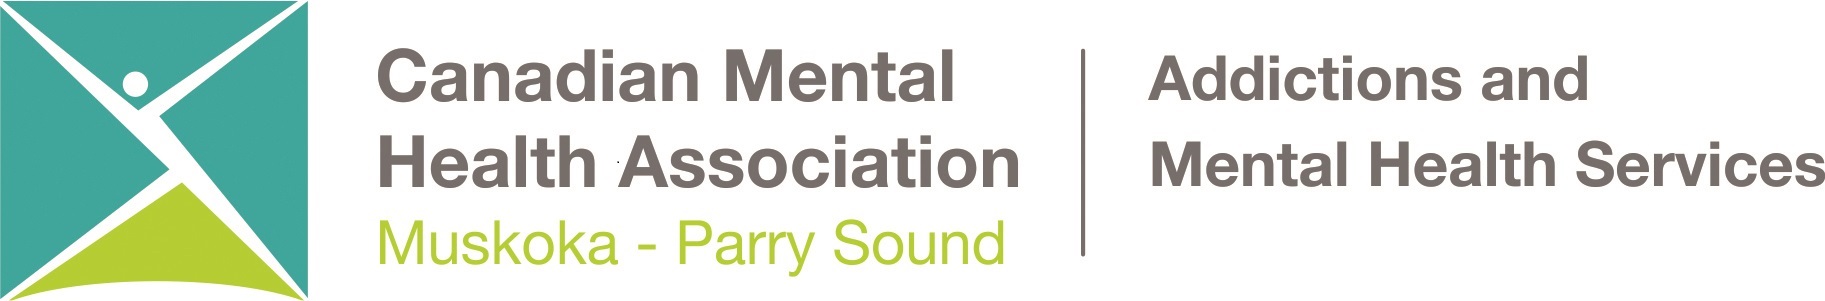 Canadian Mental Health Association – Muskoka, Parry Sound